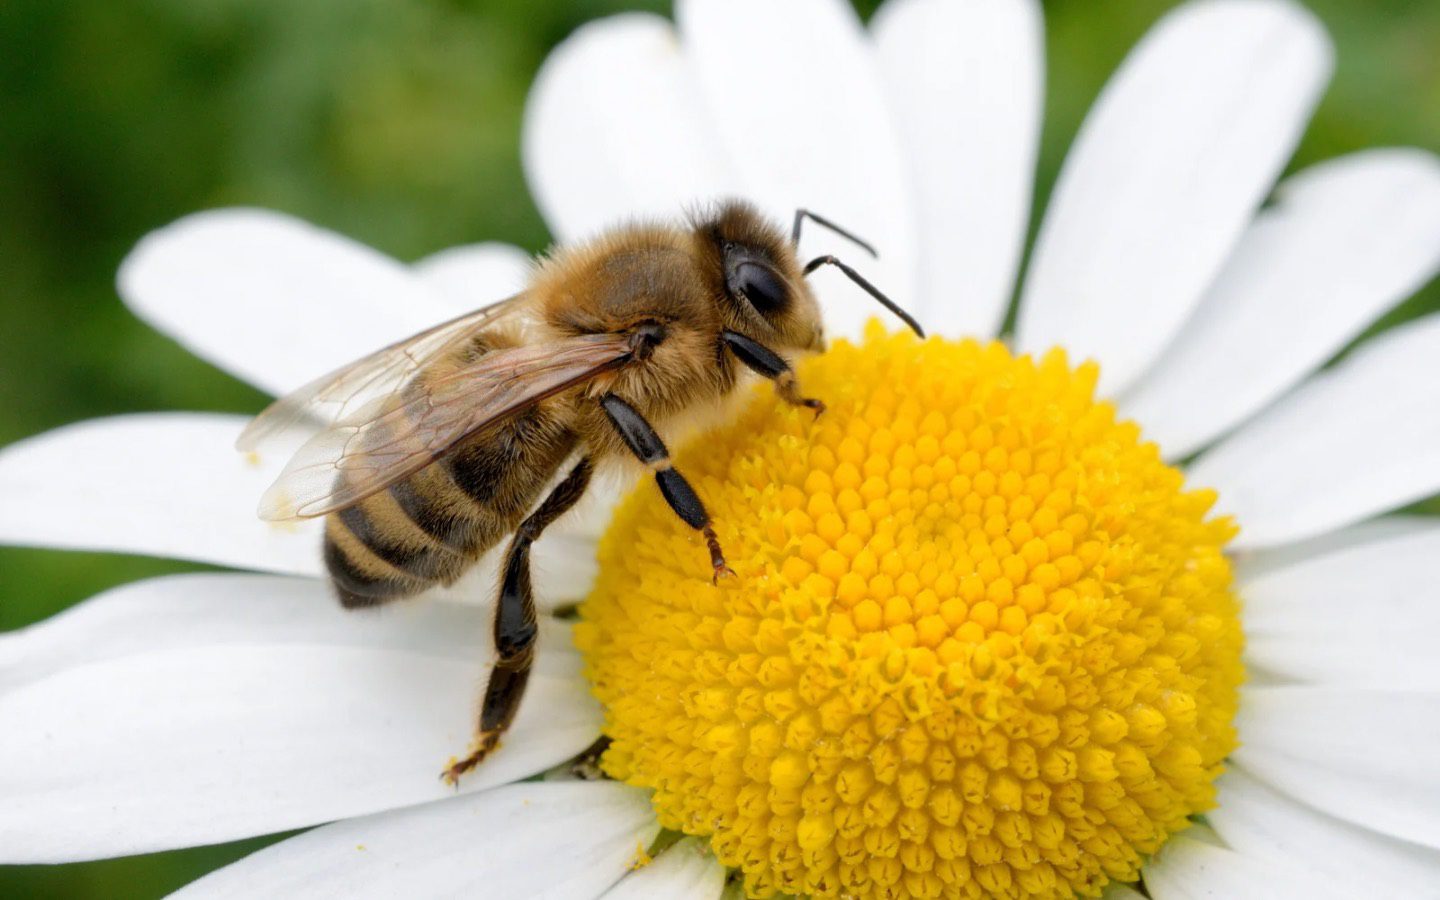 Bees as pollinators